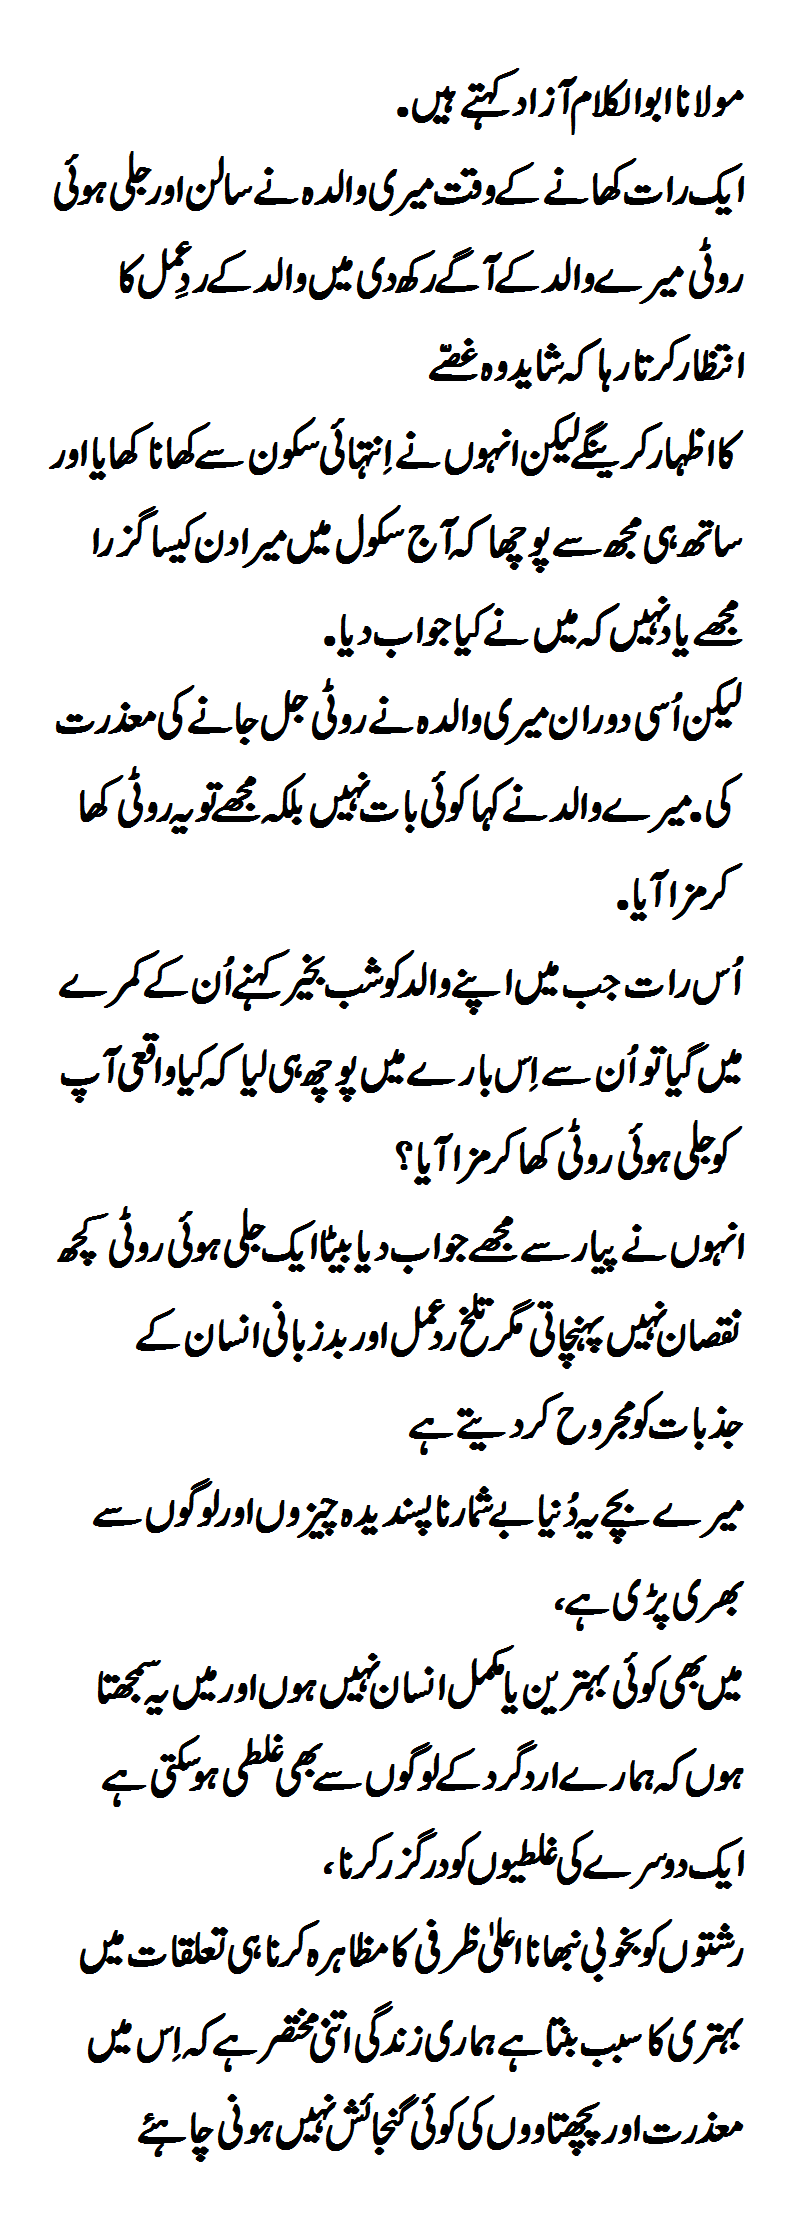 Maulana Abul Kalam Azad says